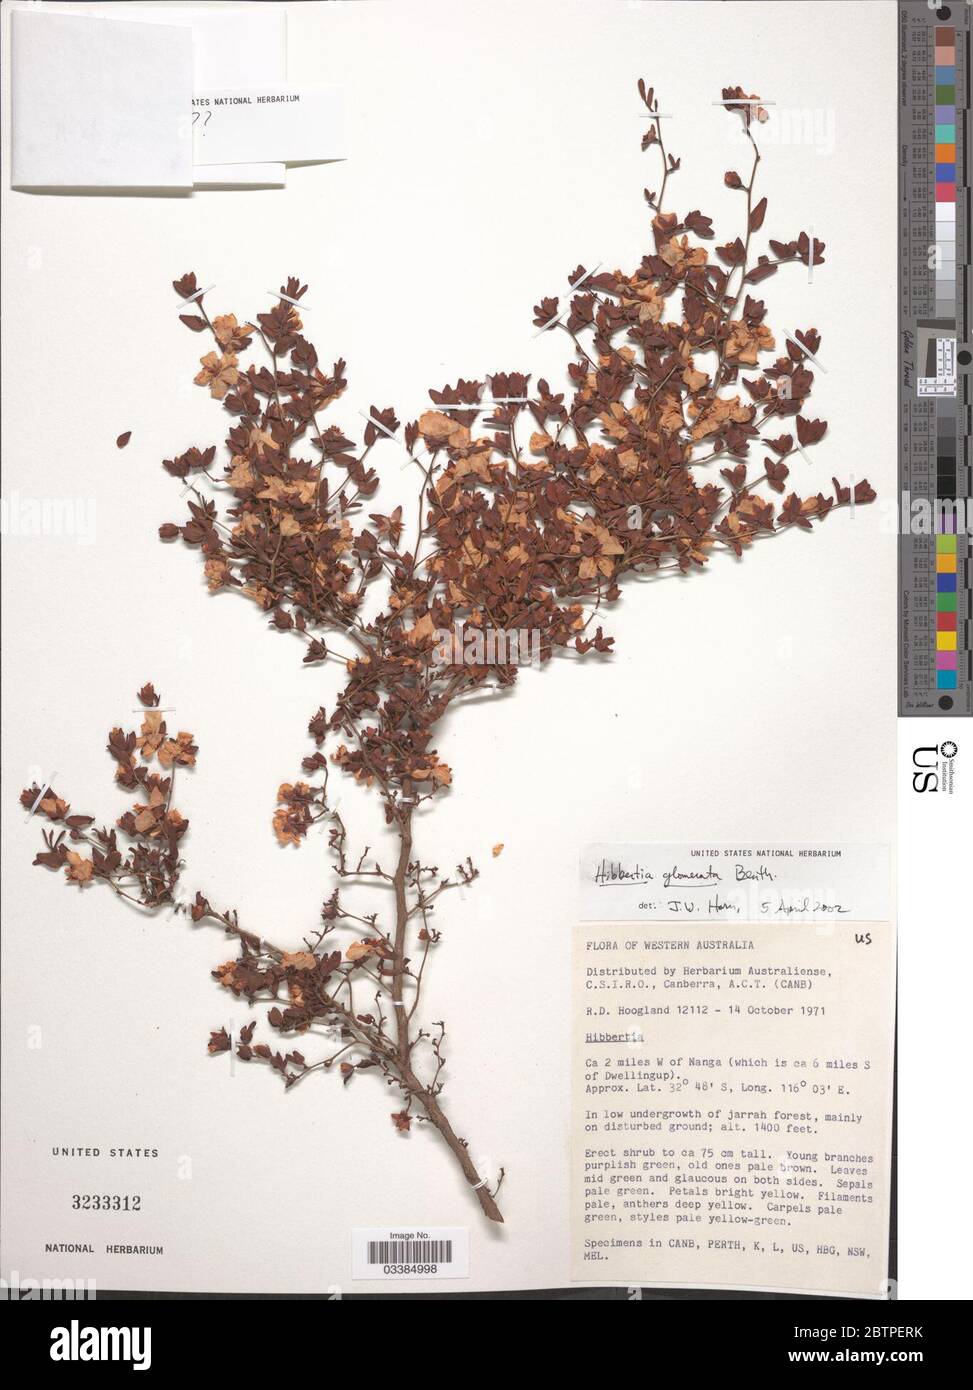 Hibbertia glomerata Benth. Stock Photo